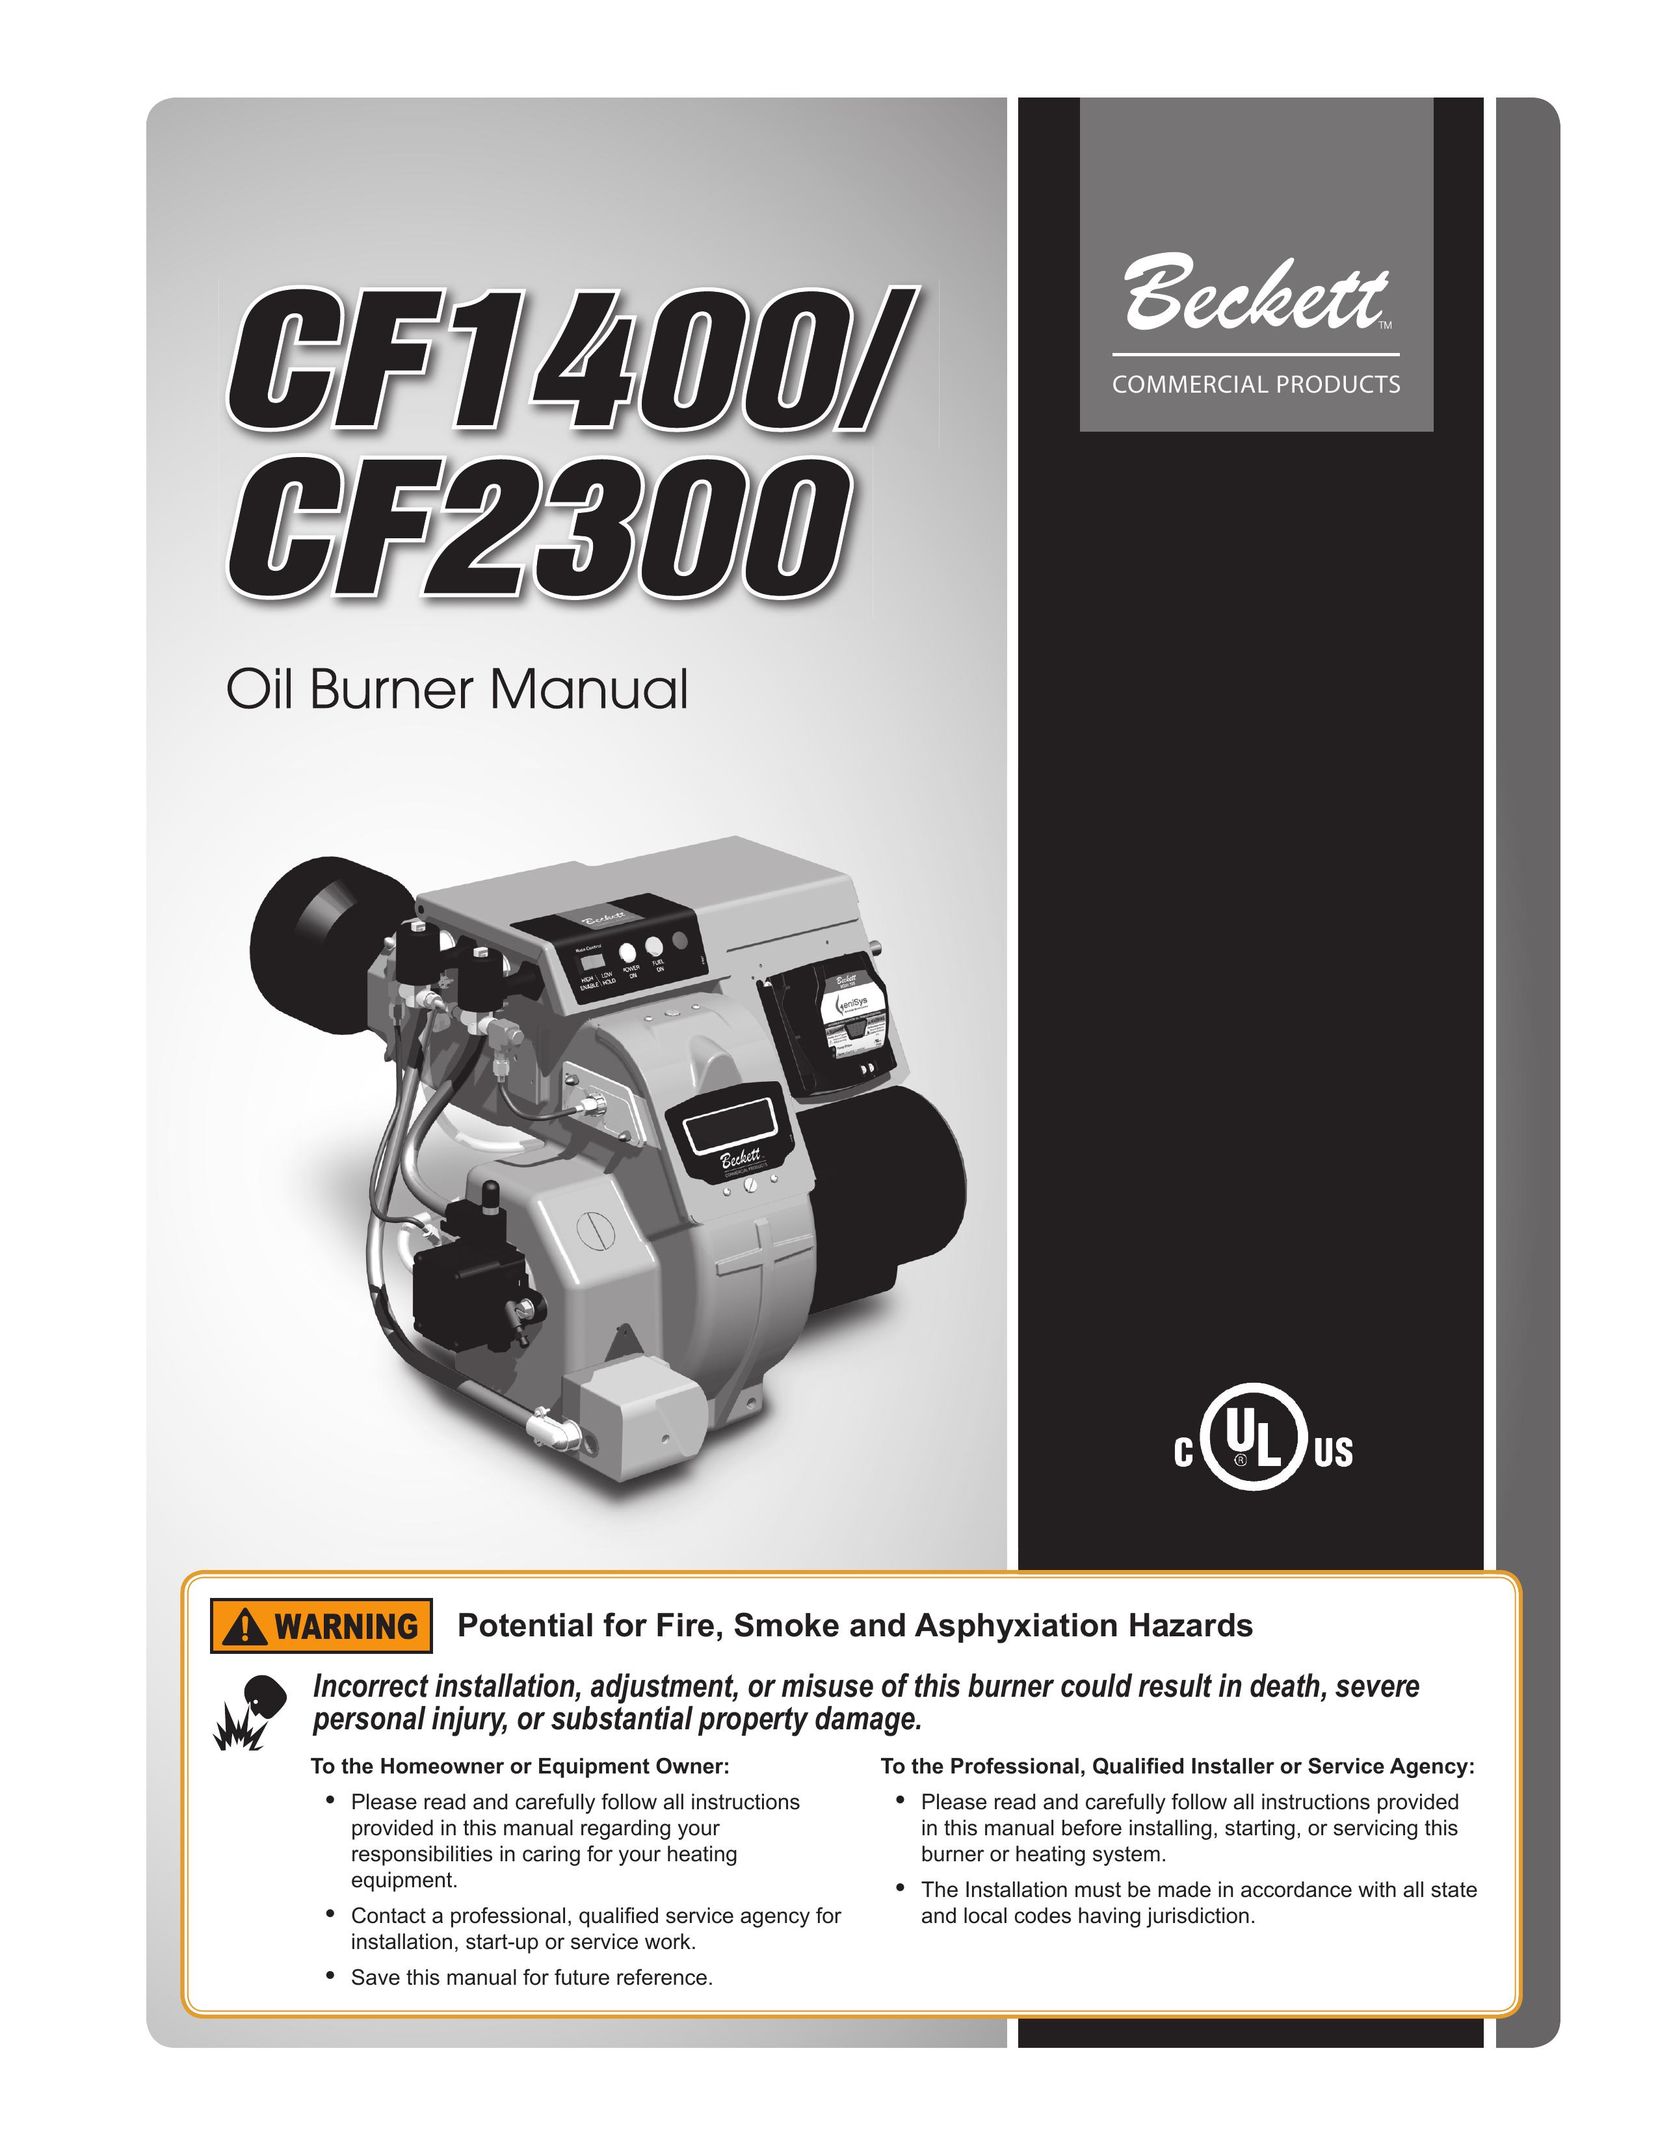 Beckett CF1400 Burner User Manual